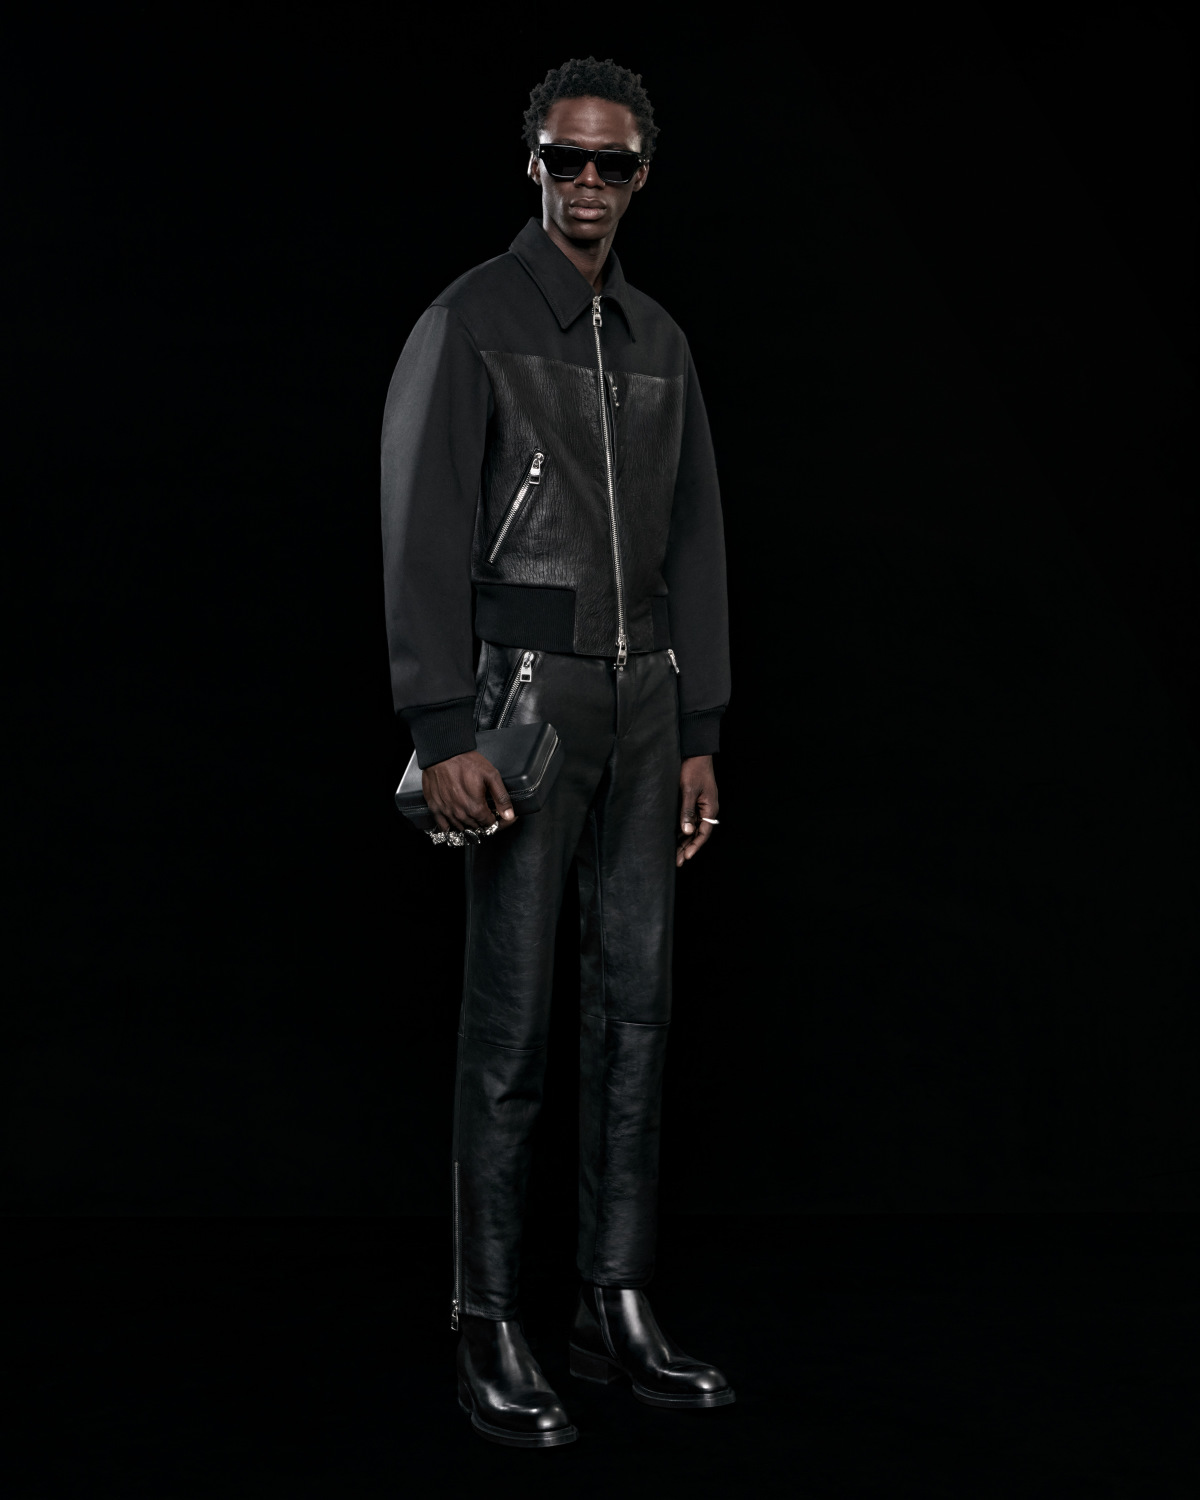 Alexander McQueen Presents Its New Pre-Autumn/Winter 2023 Menswear Collection